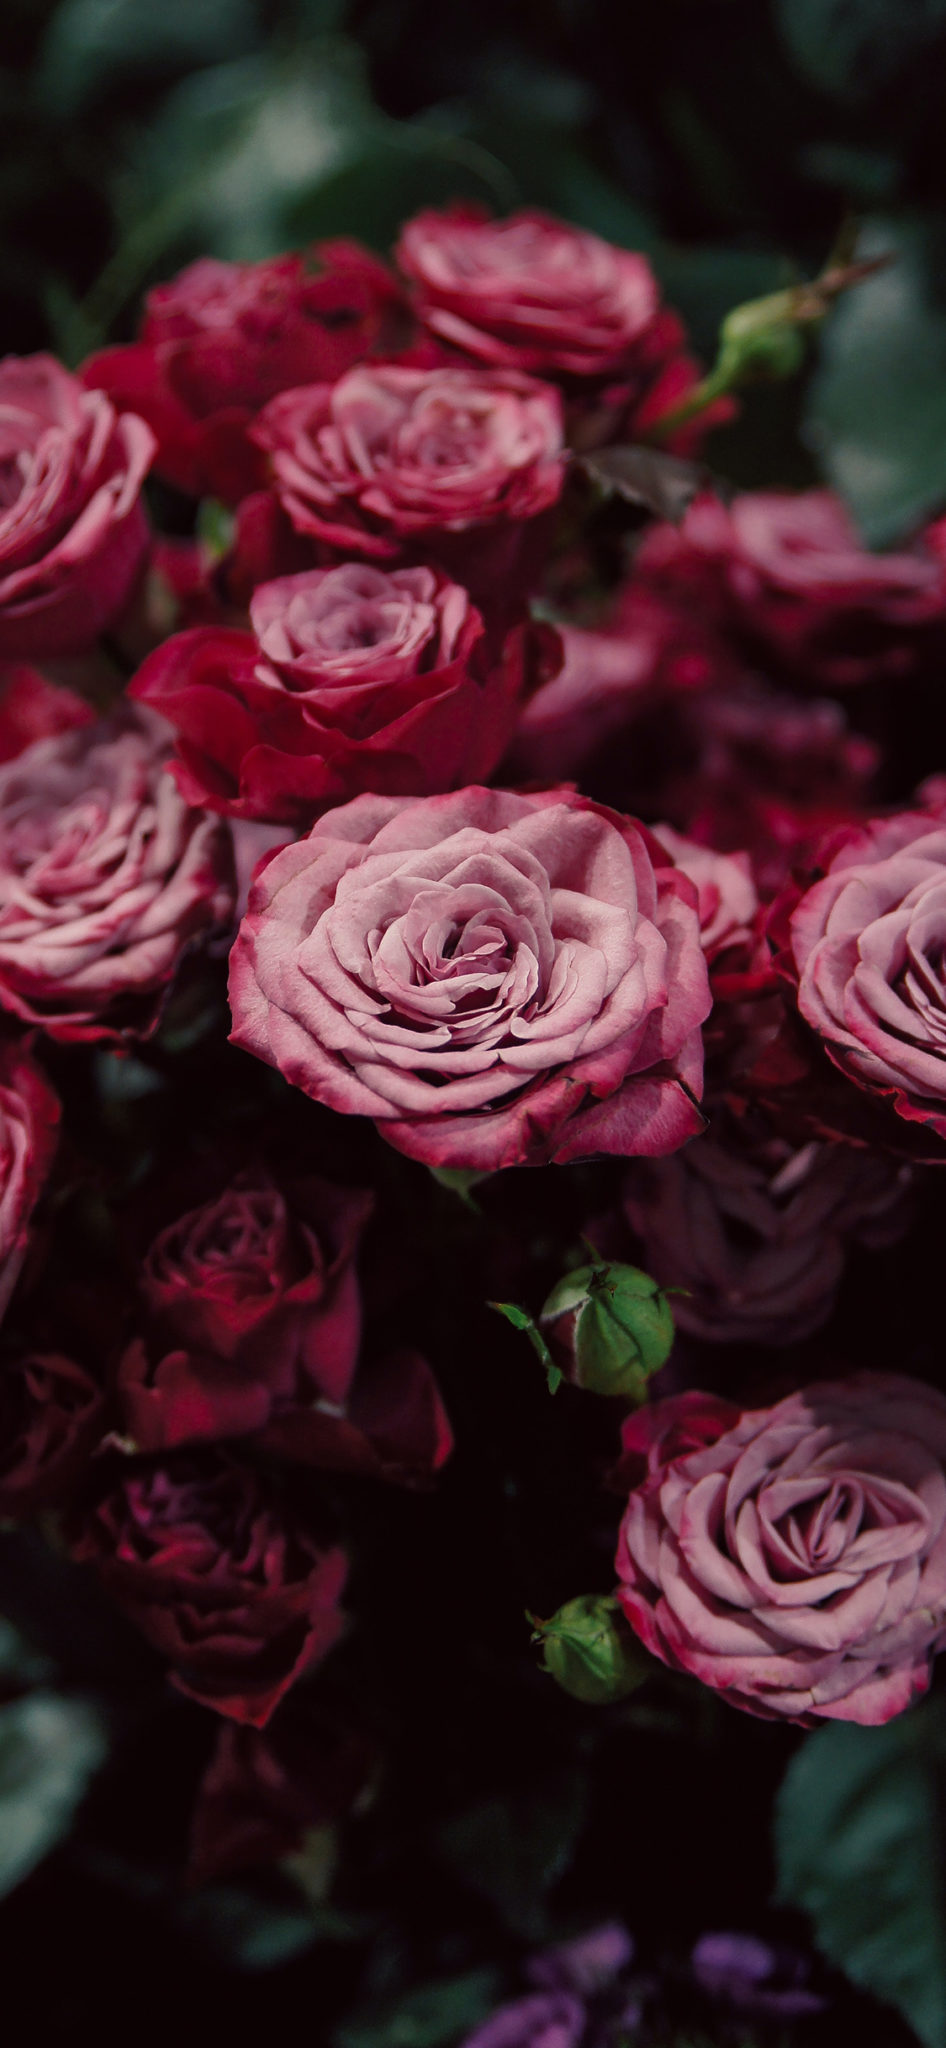 49+ Beautiful Rose iPhone Wallpaper (HD Quality)